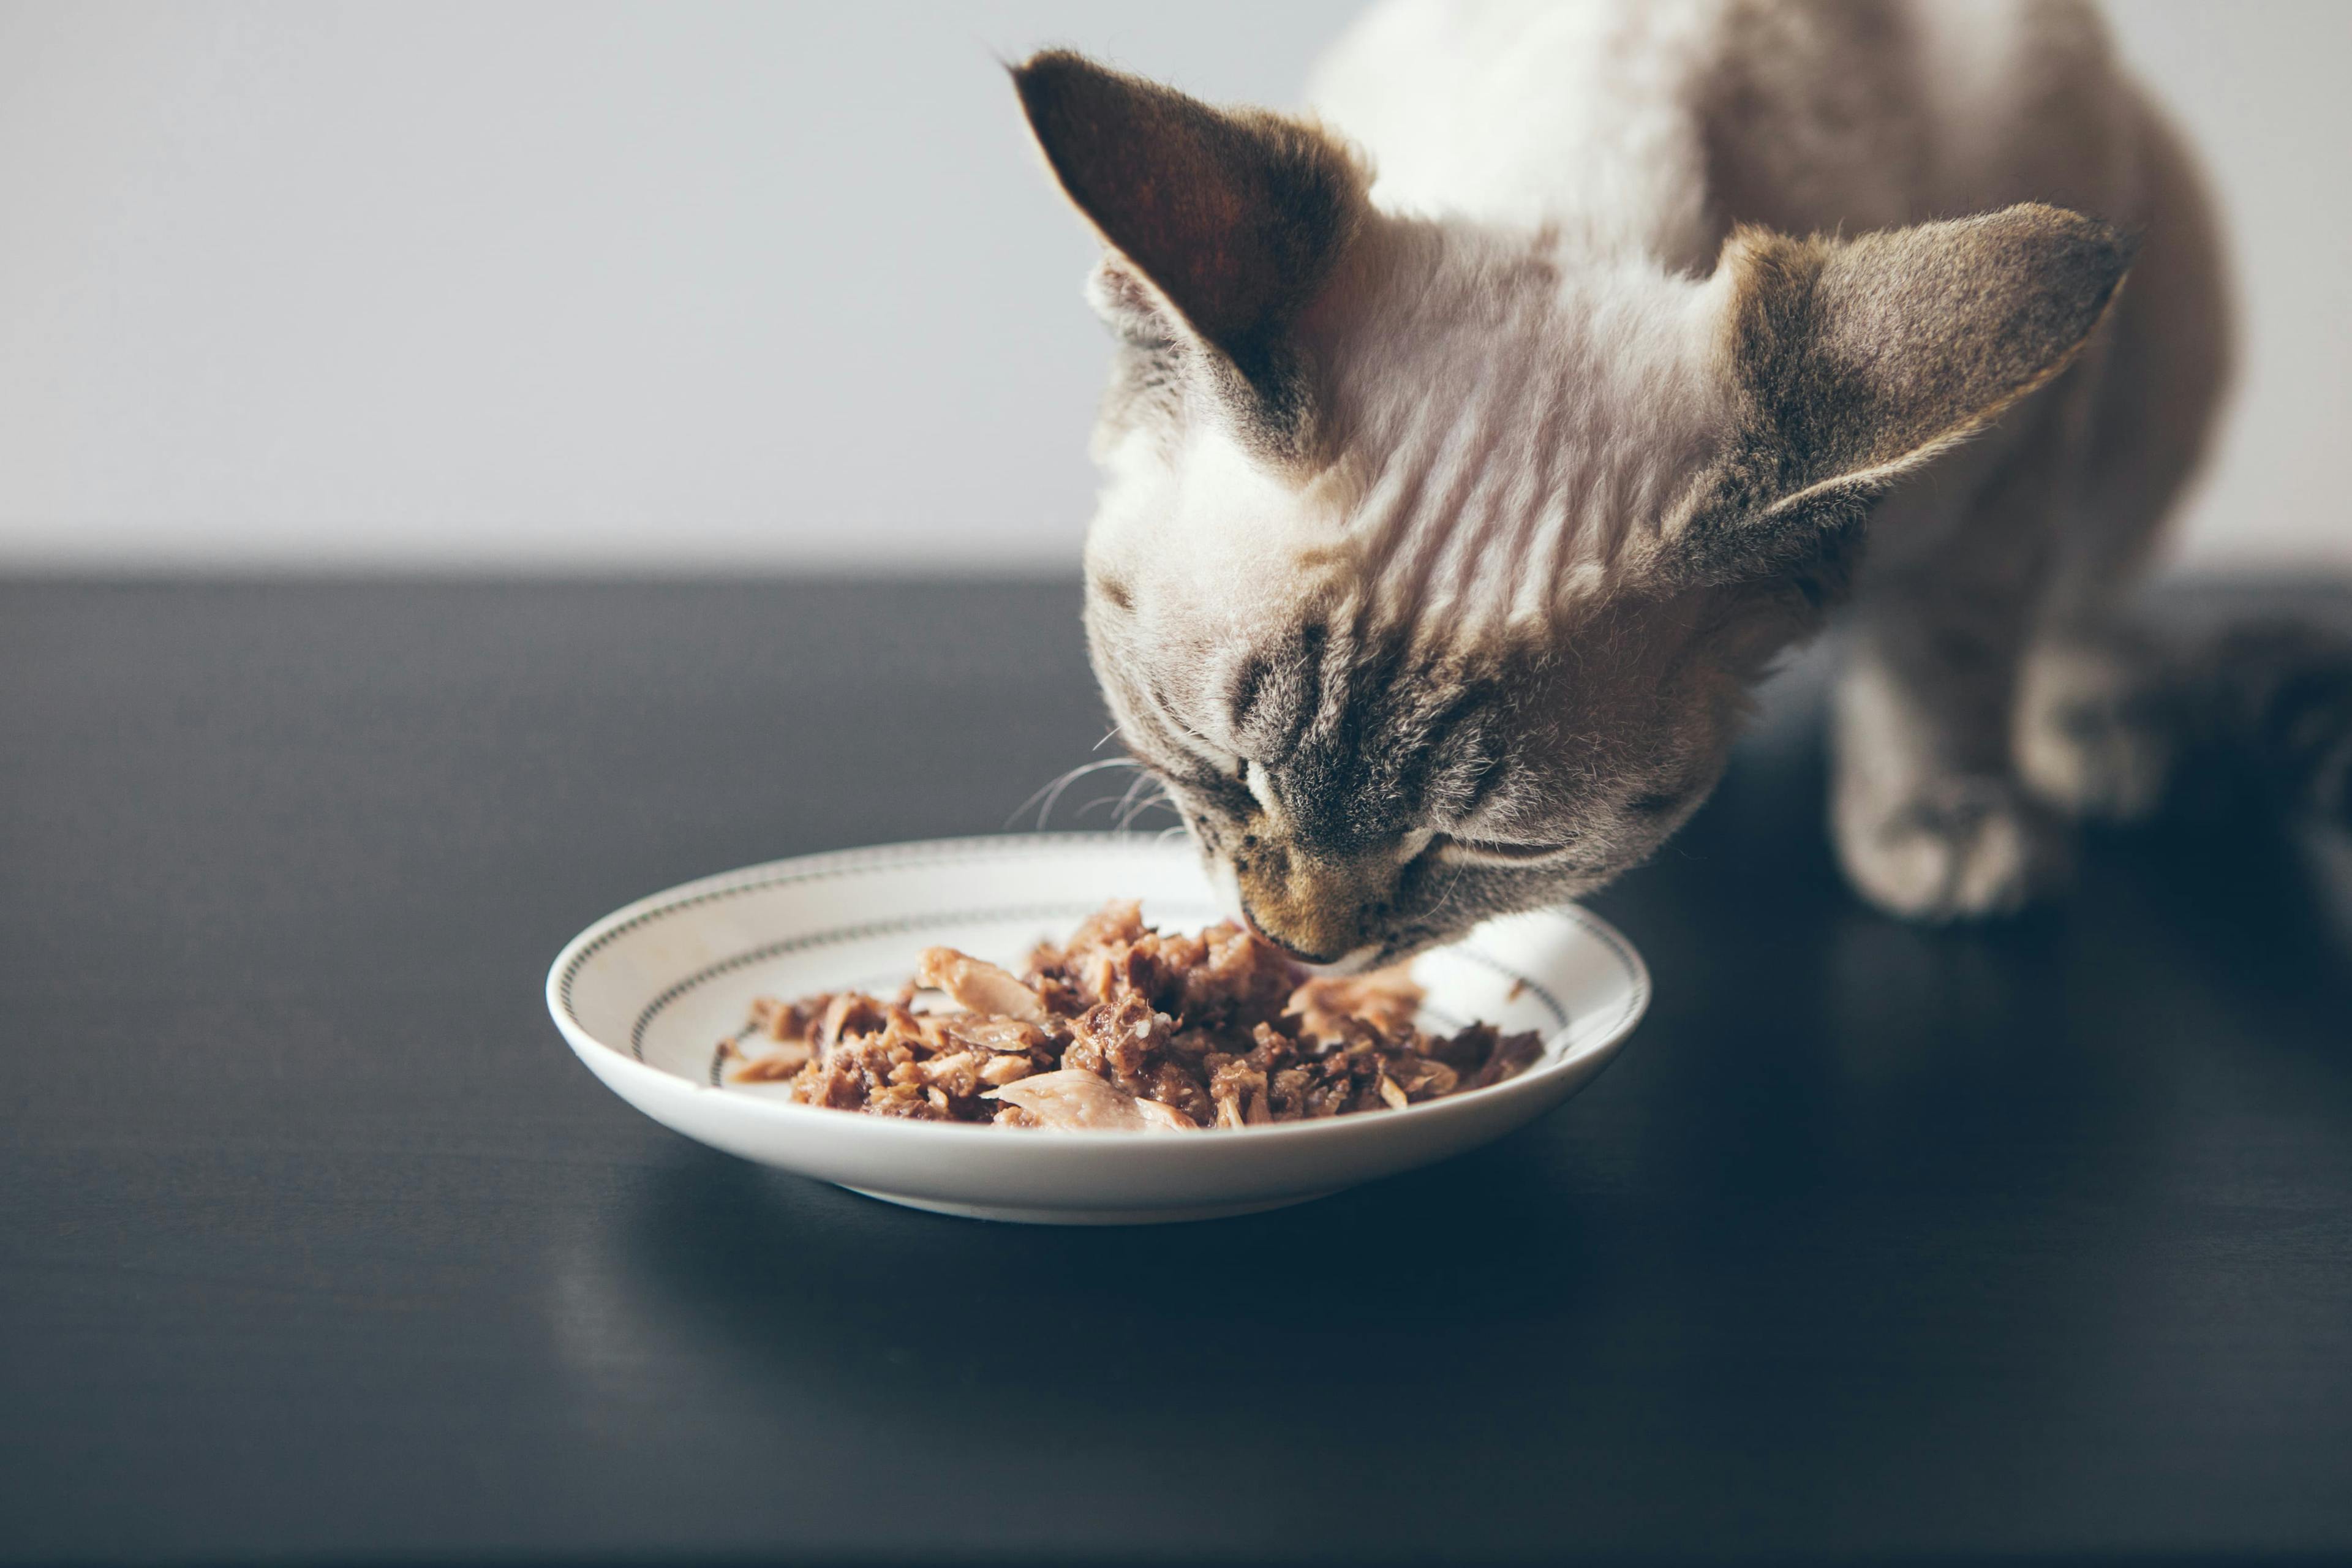 cat eating from dish / veera / stock.adobe.com